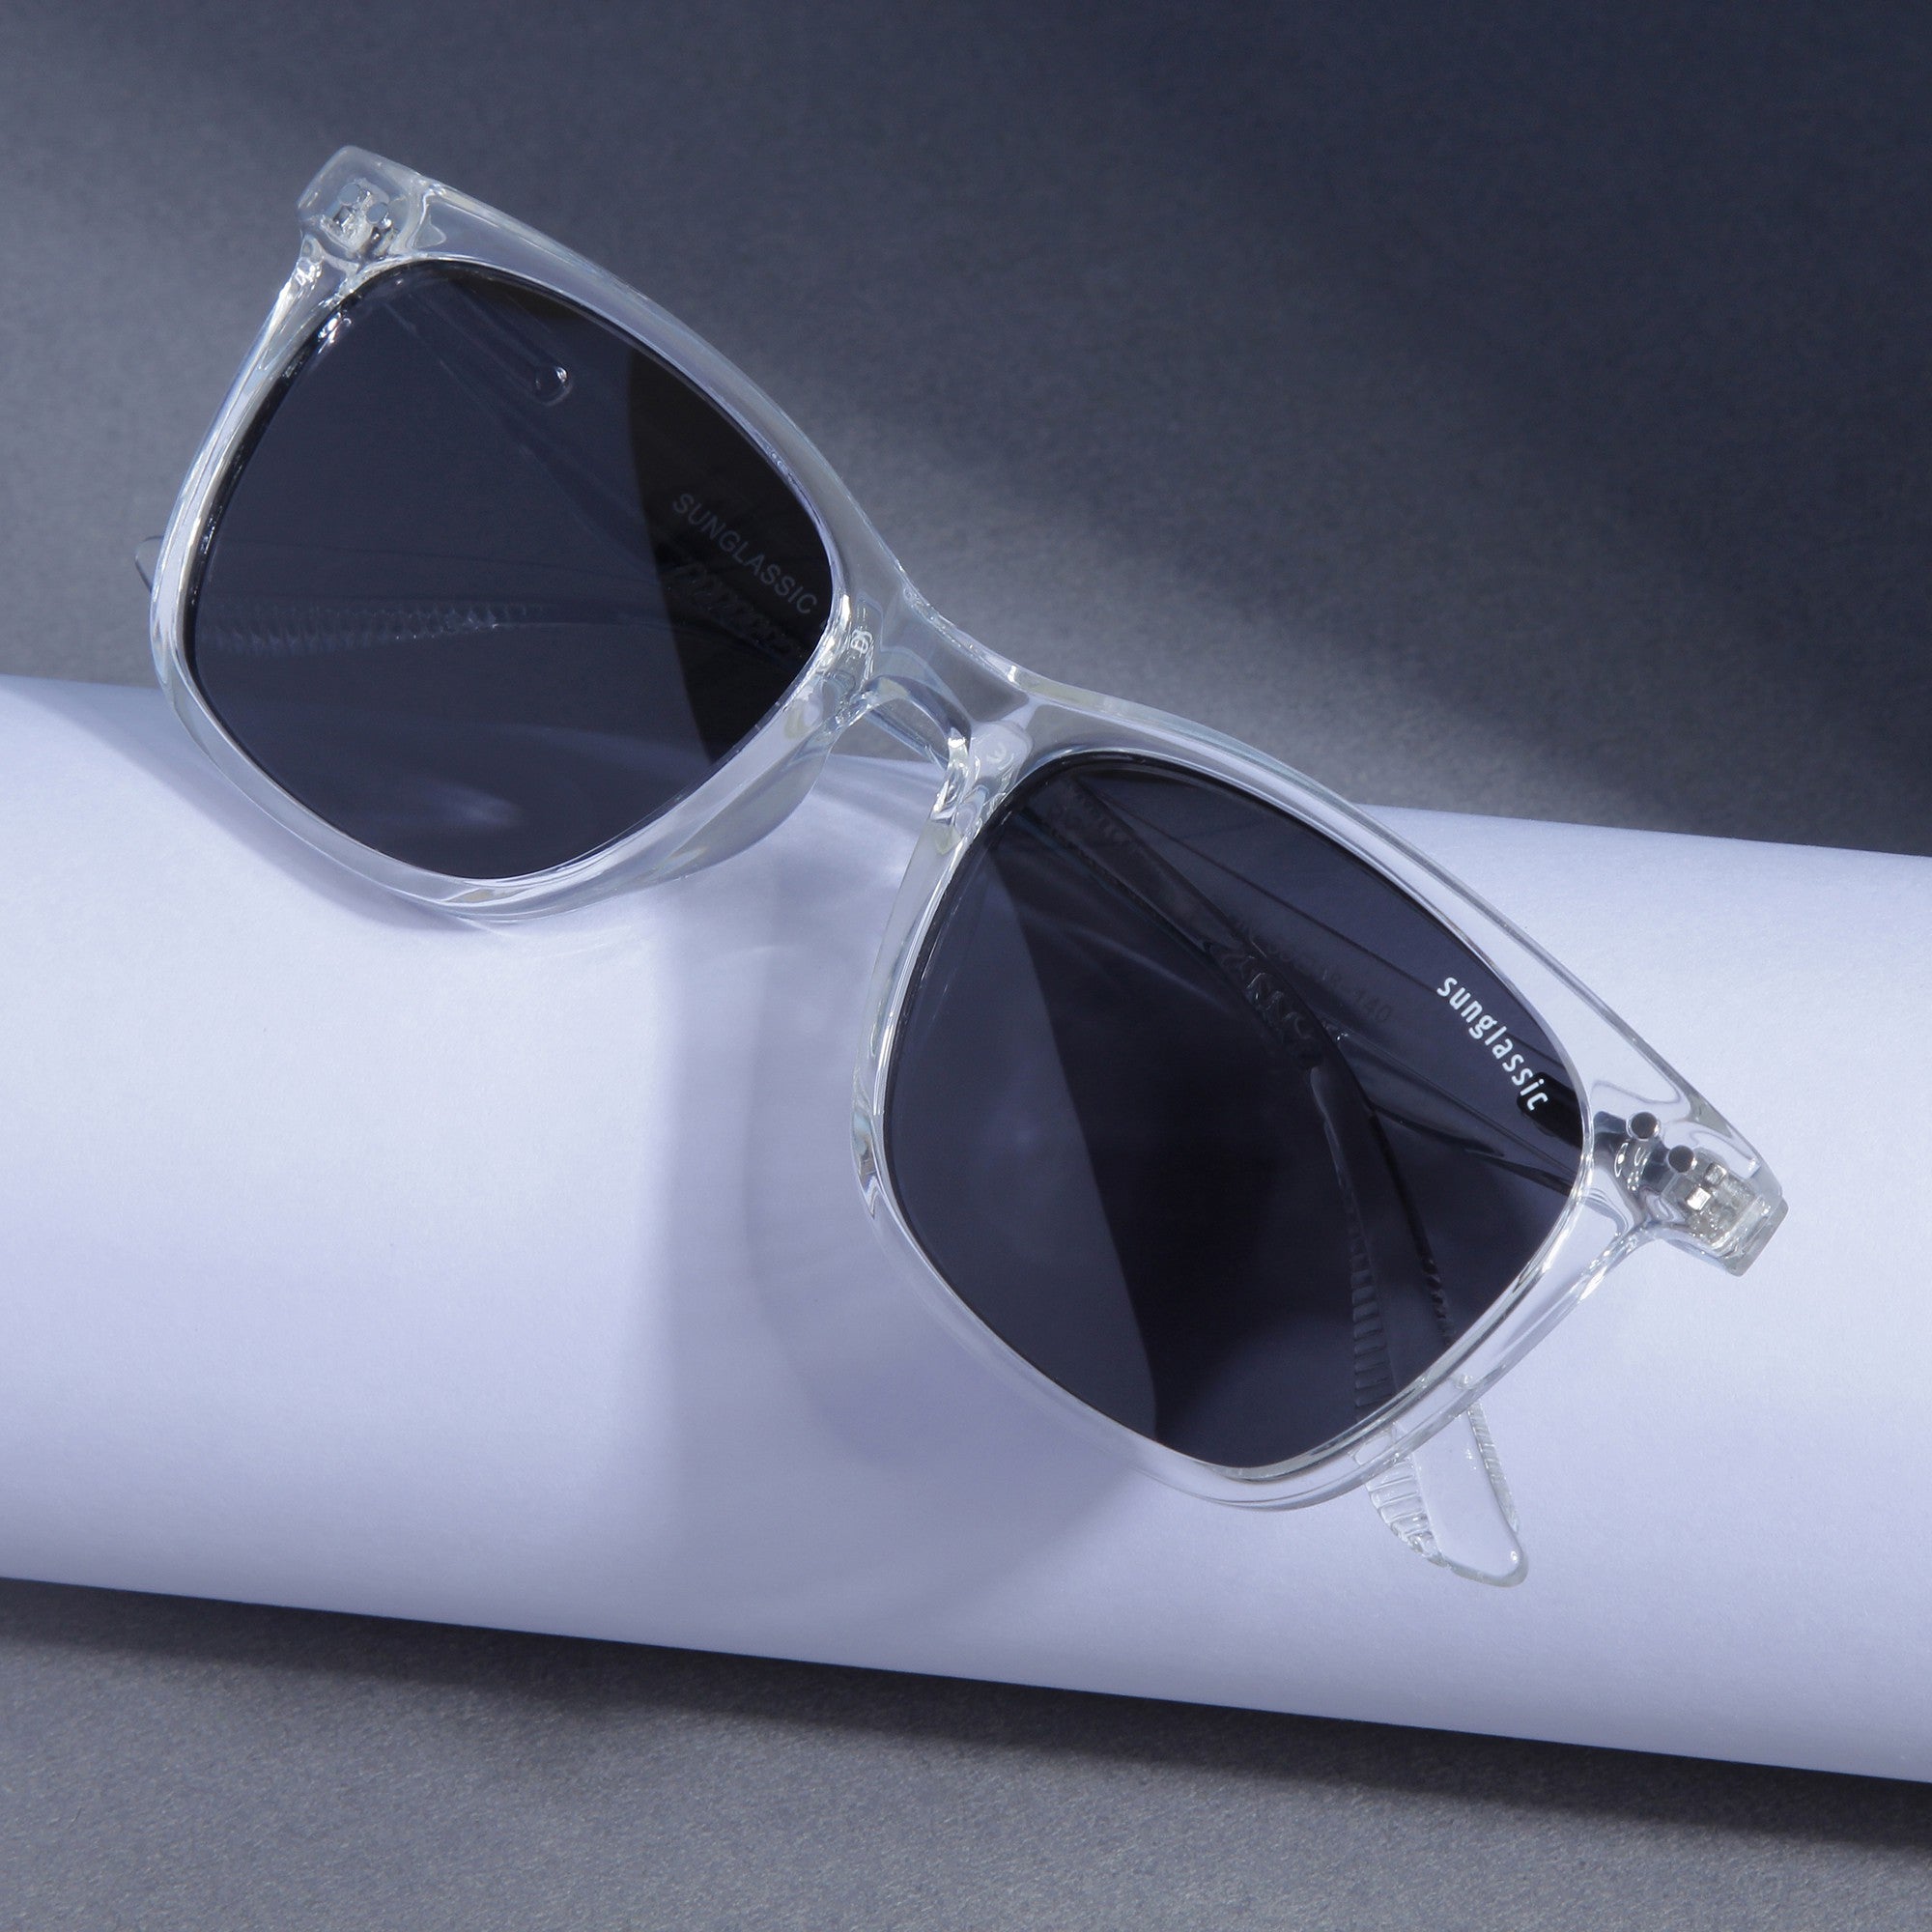 Marlton. Clear Black Polarized TR90 Square Sunglasses